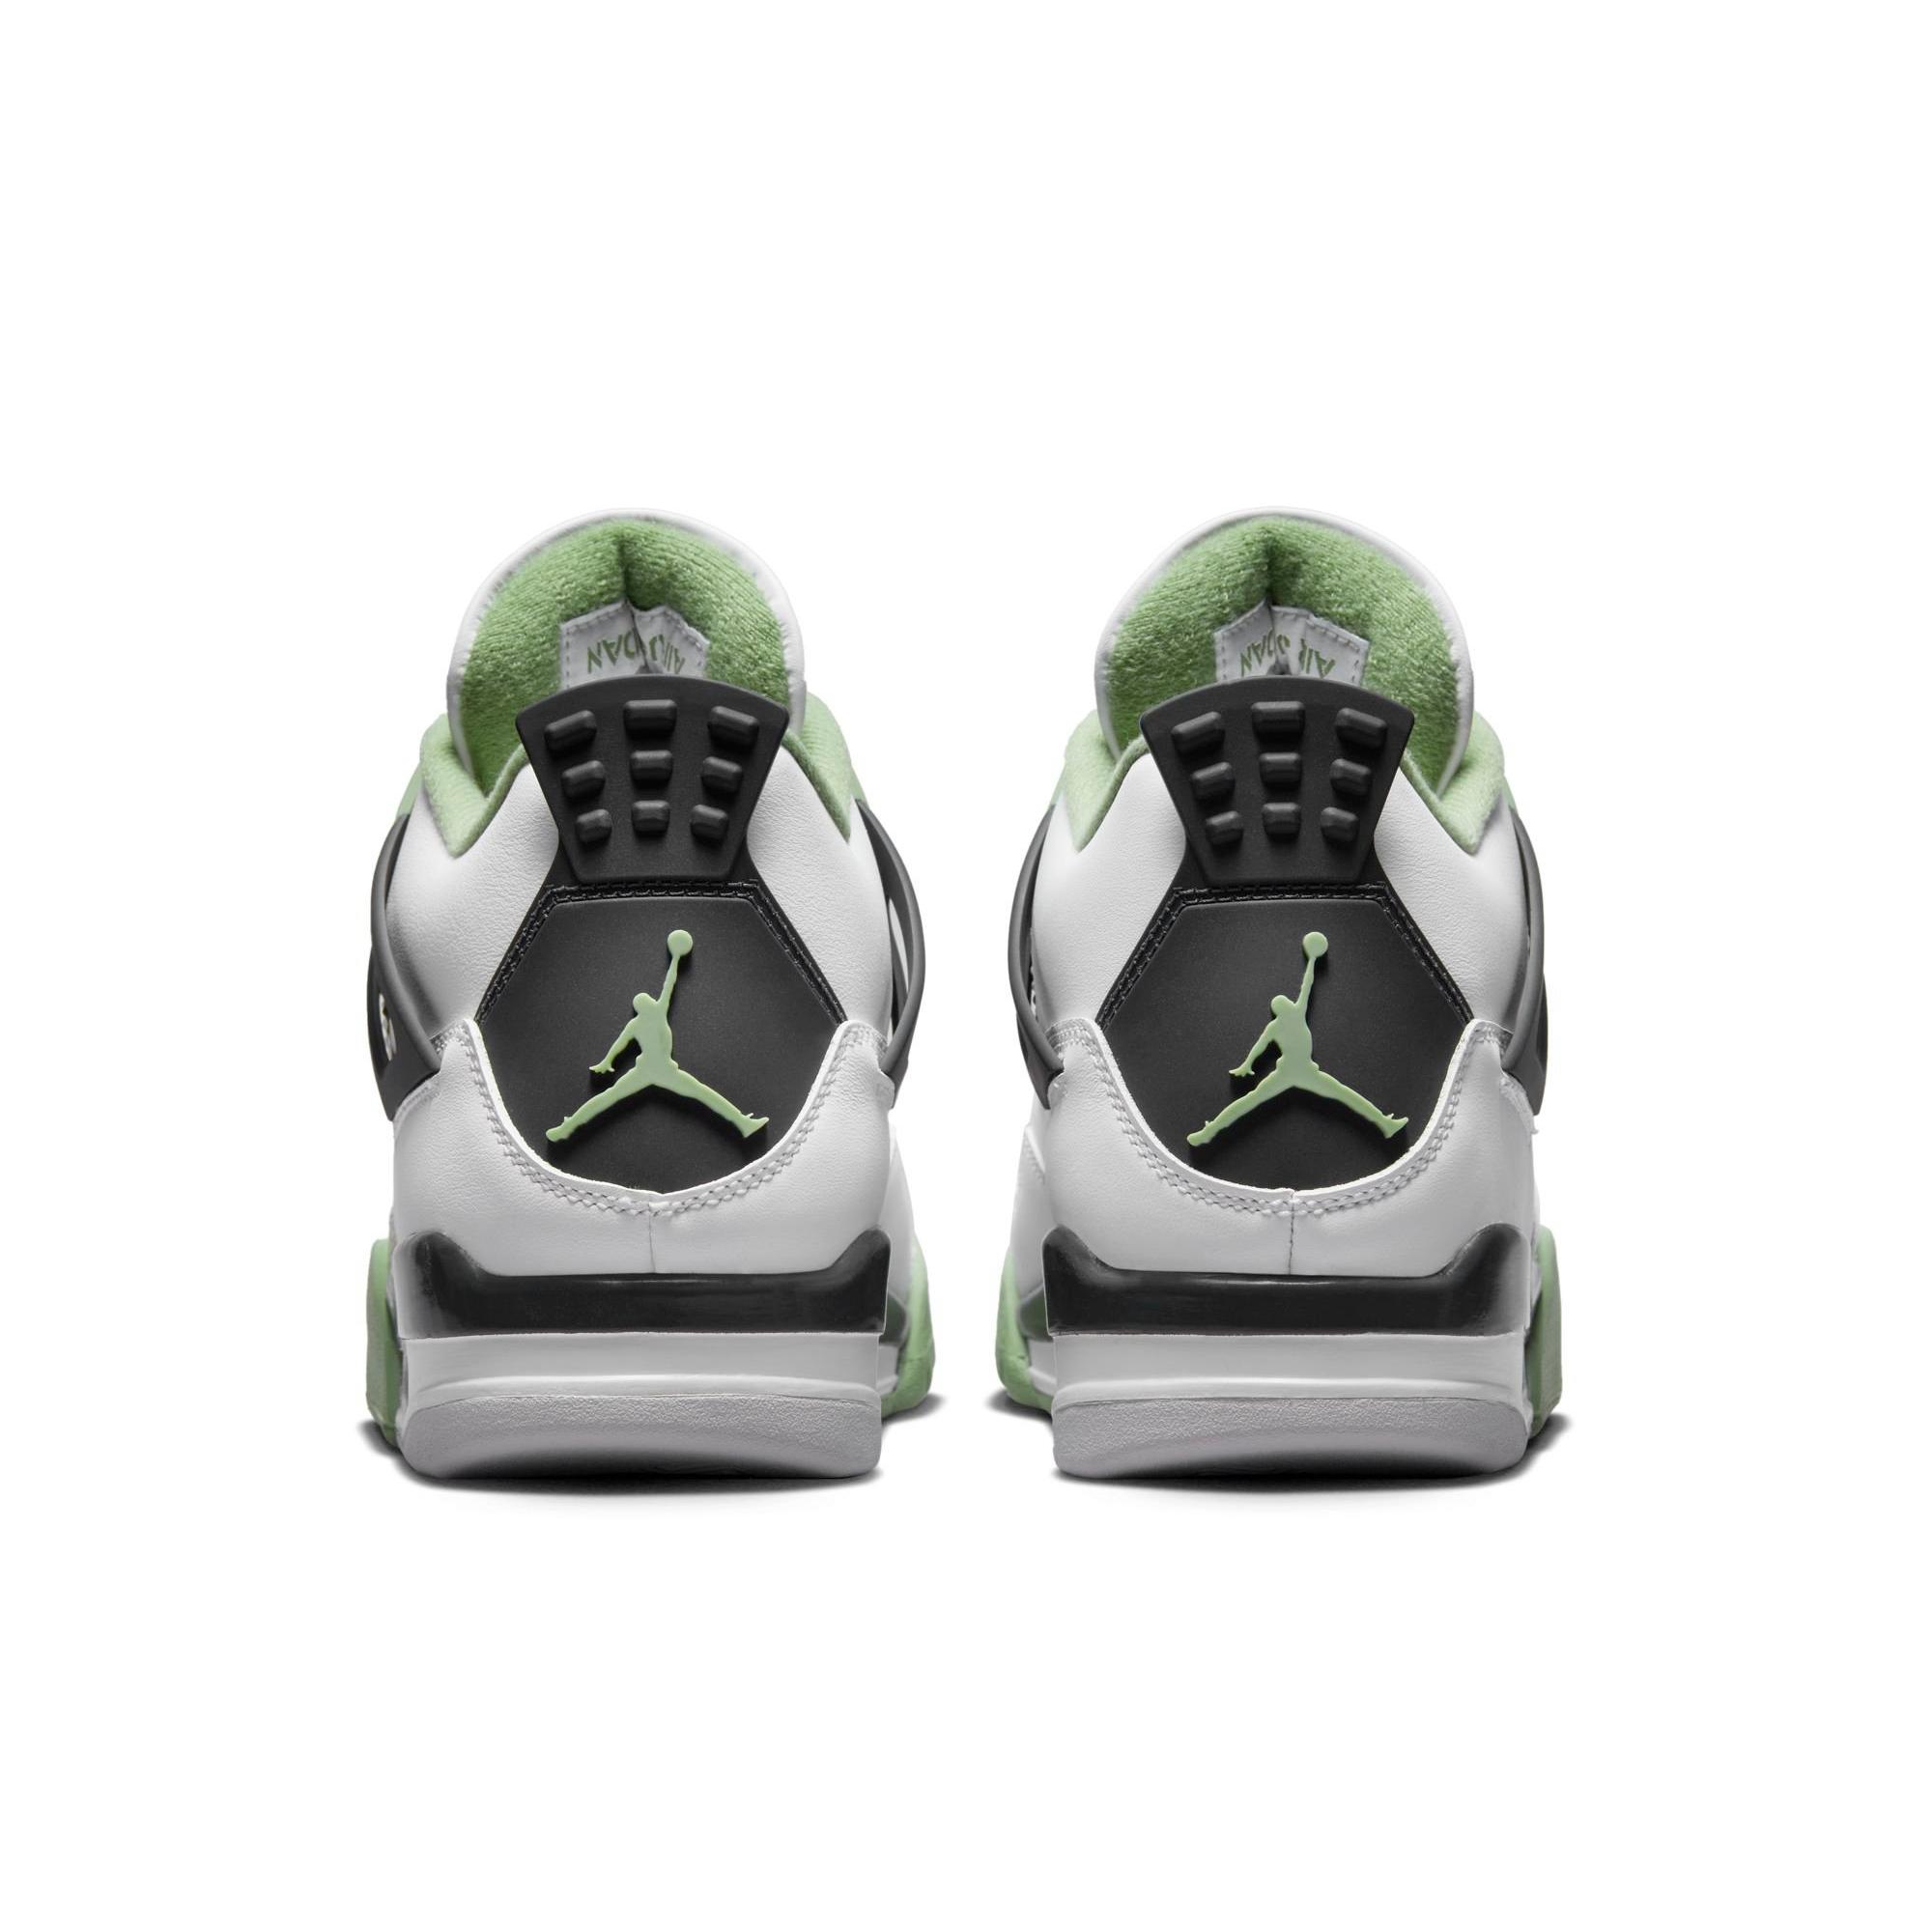 Sneakers Release – Jordan 13 Retro “White/Fire Red